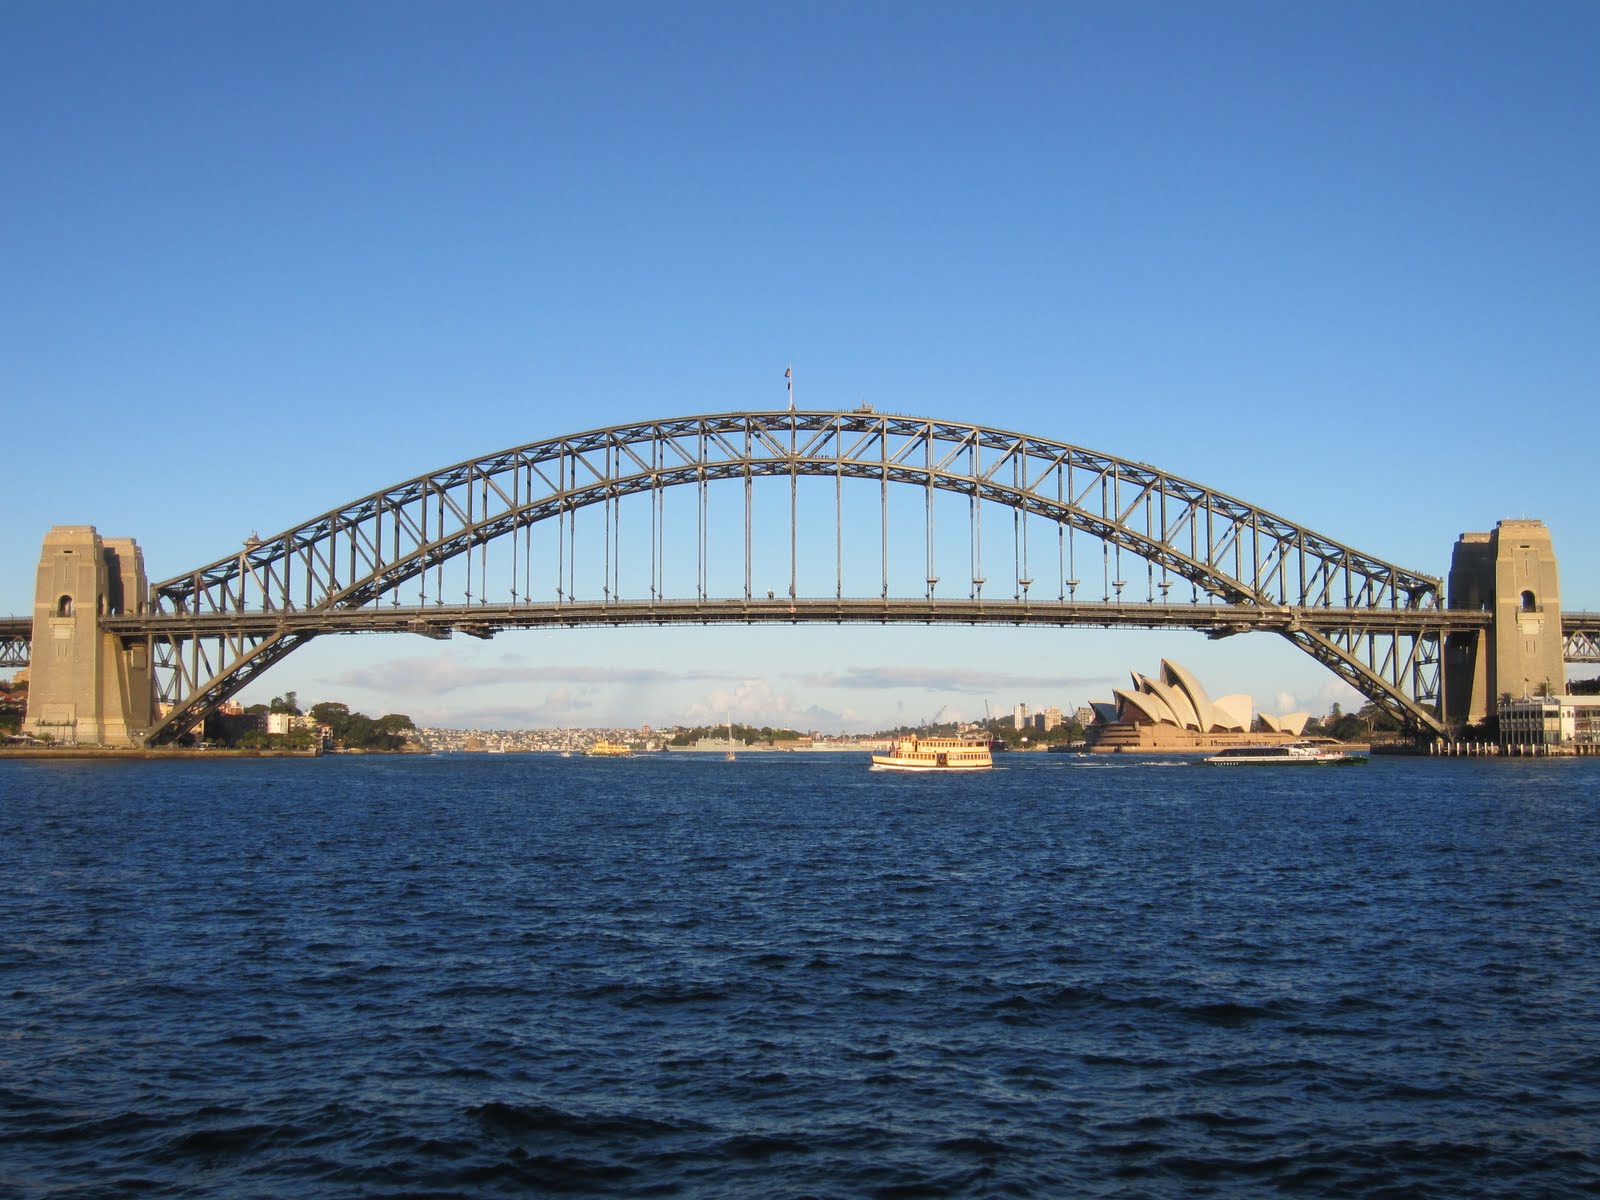 Sydney Harbour Bridge Backgrounds on Wallpapers Vista